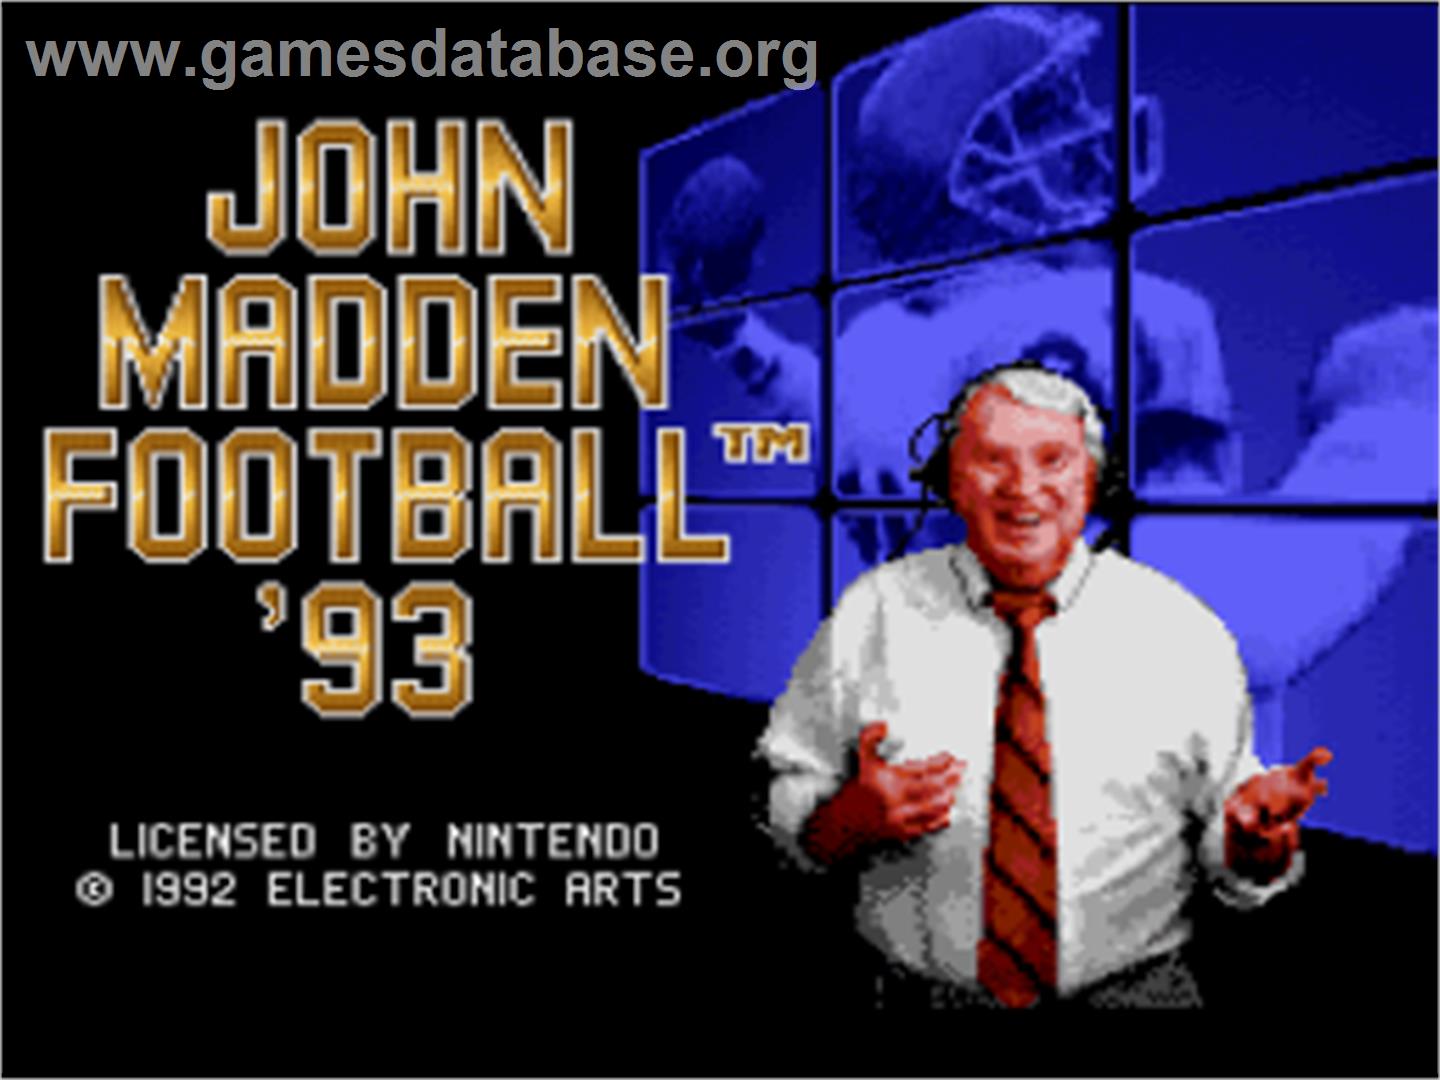 John Madden Football '93 - Nintendo SNES - Artwork - Title Screen